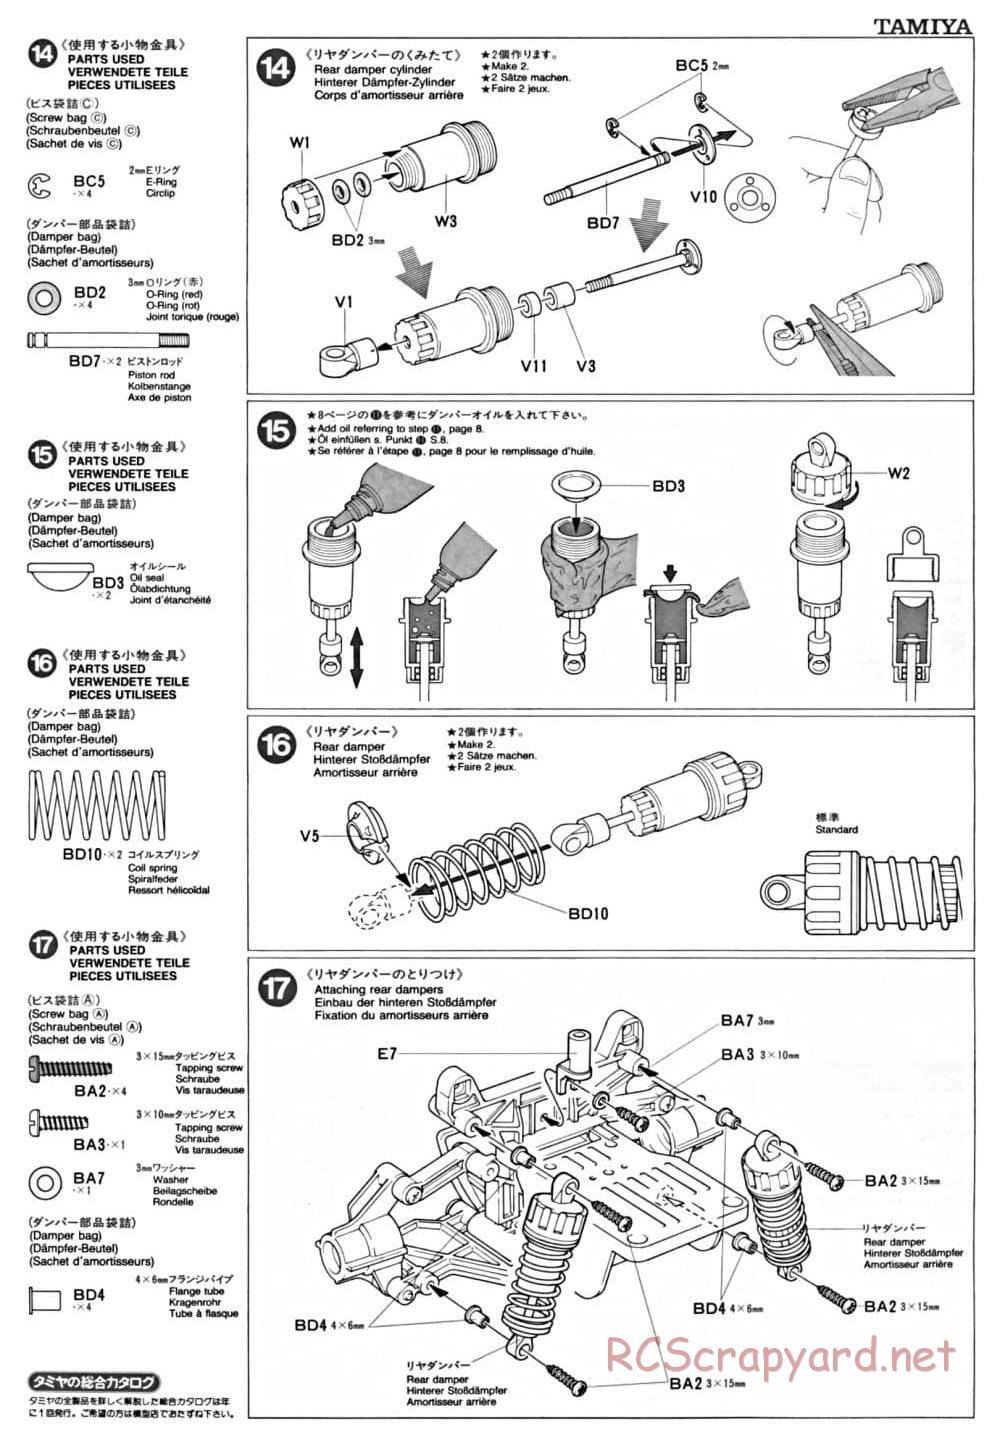 Tamiya - FF-01 Chassis - Manual - Page 9